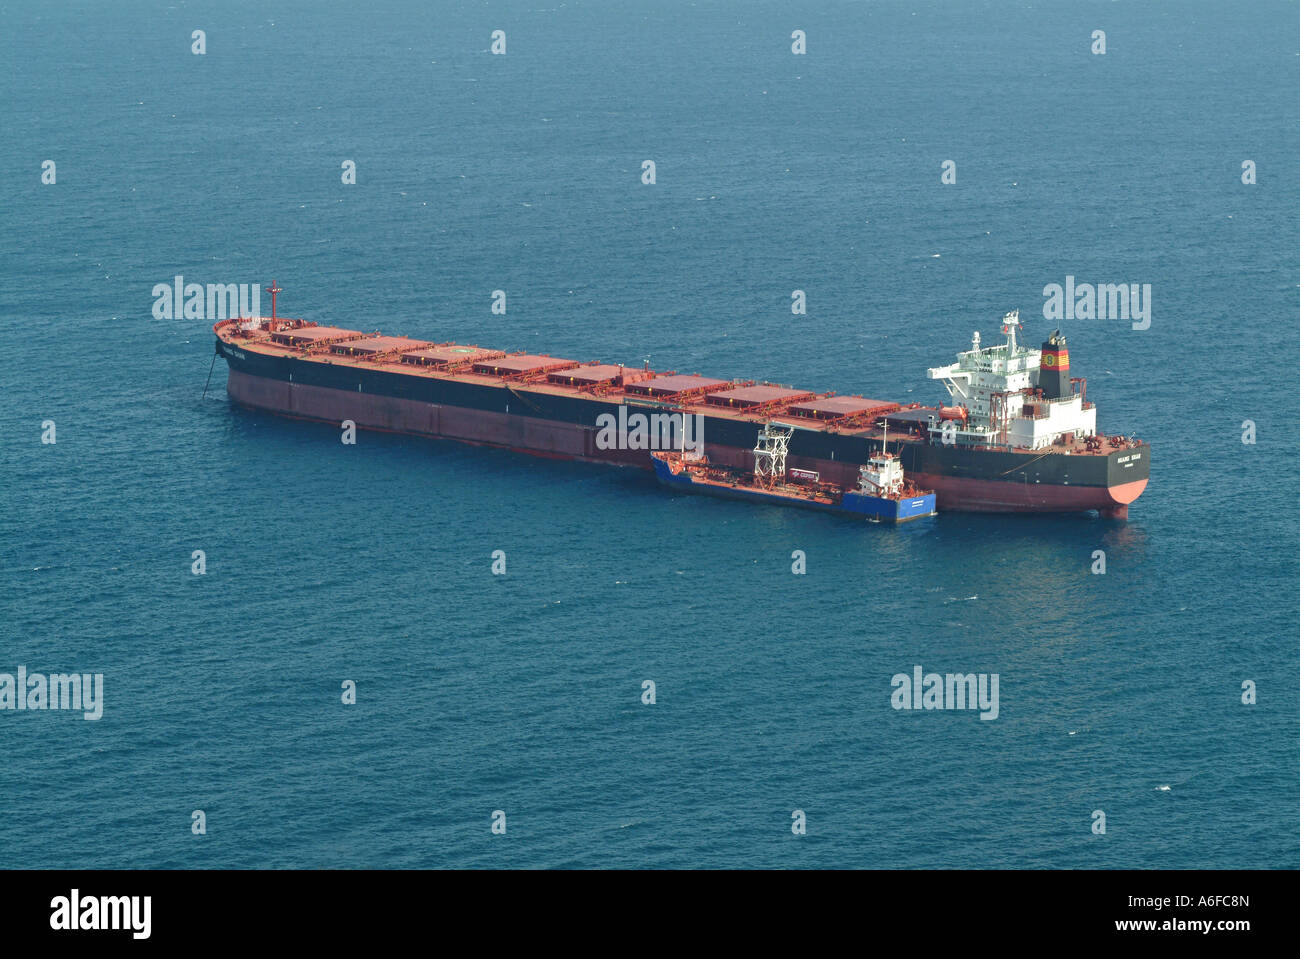 Svuotare freighter mare mediterraneo leerer Frachter auf dem Mittelmeer Vor den Kanaren Foto Stock